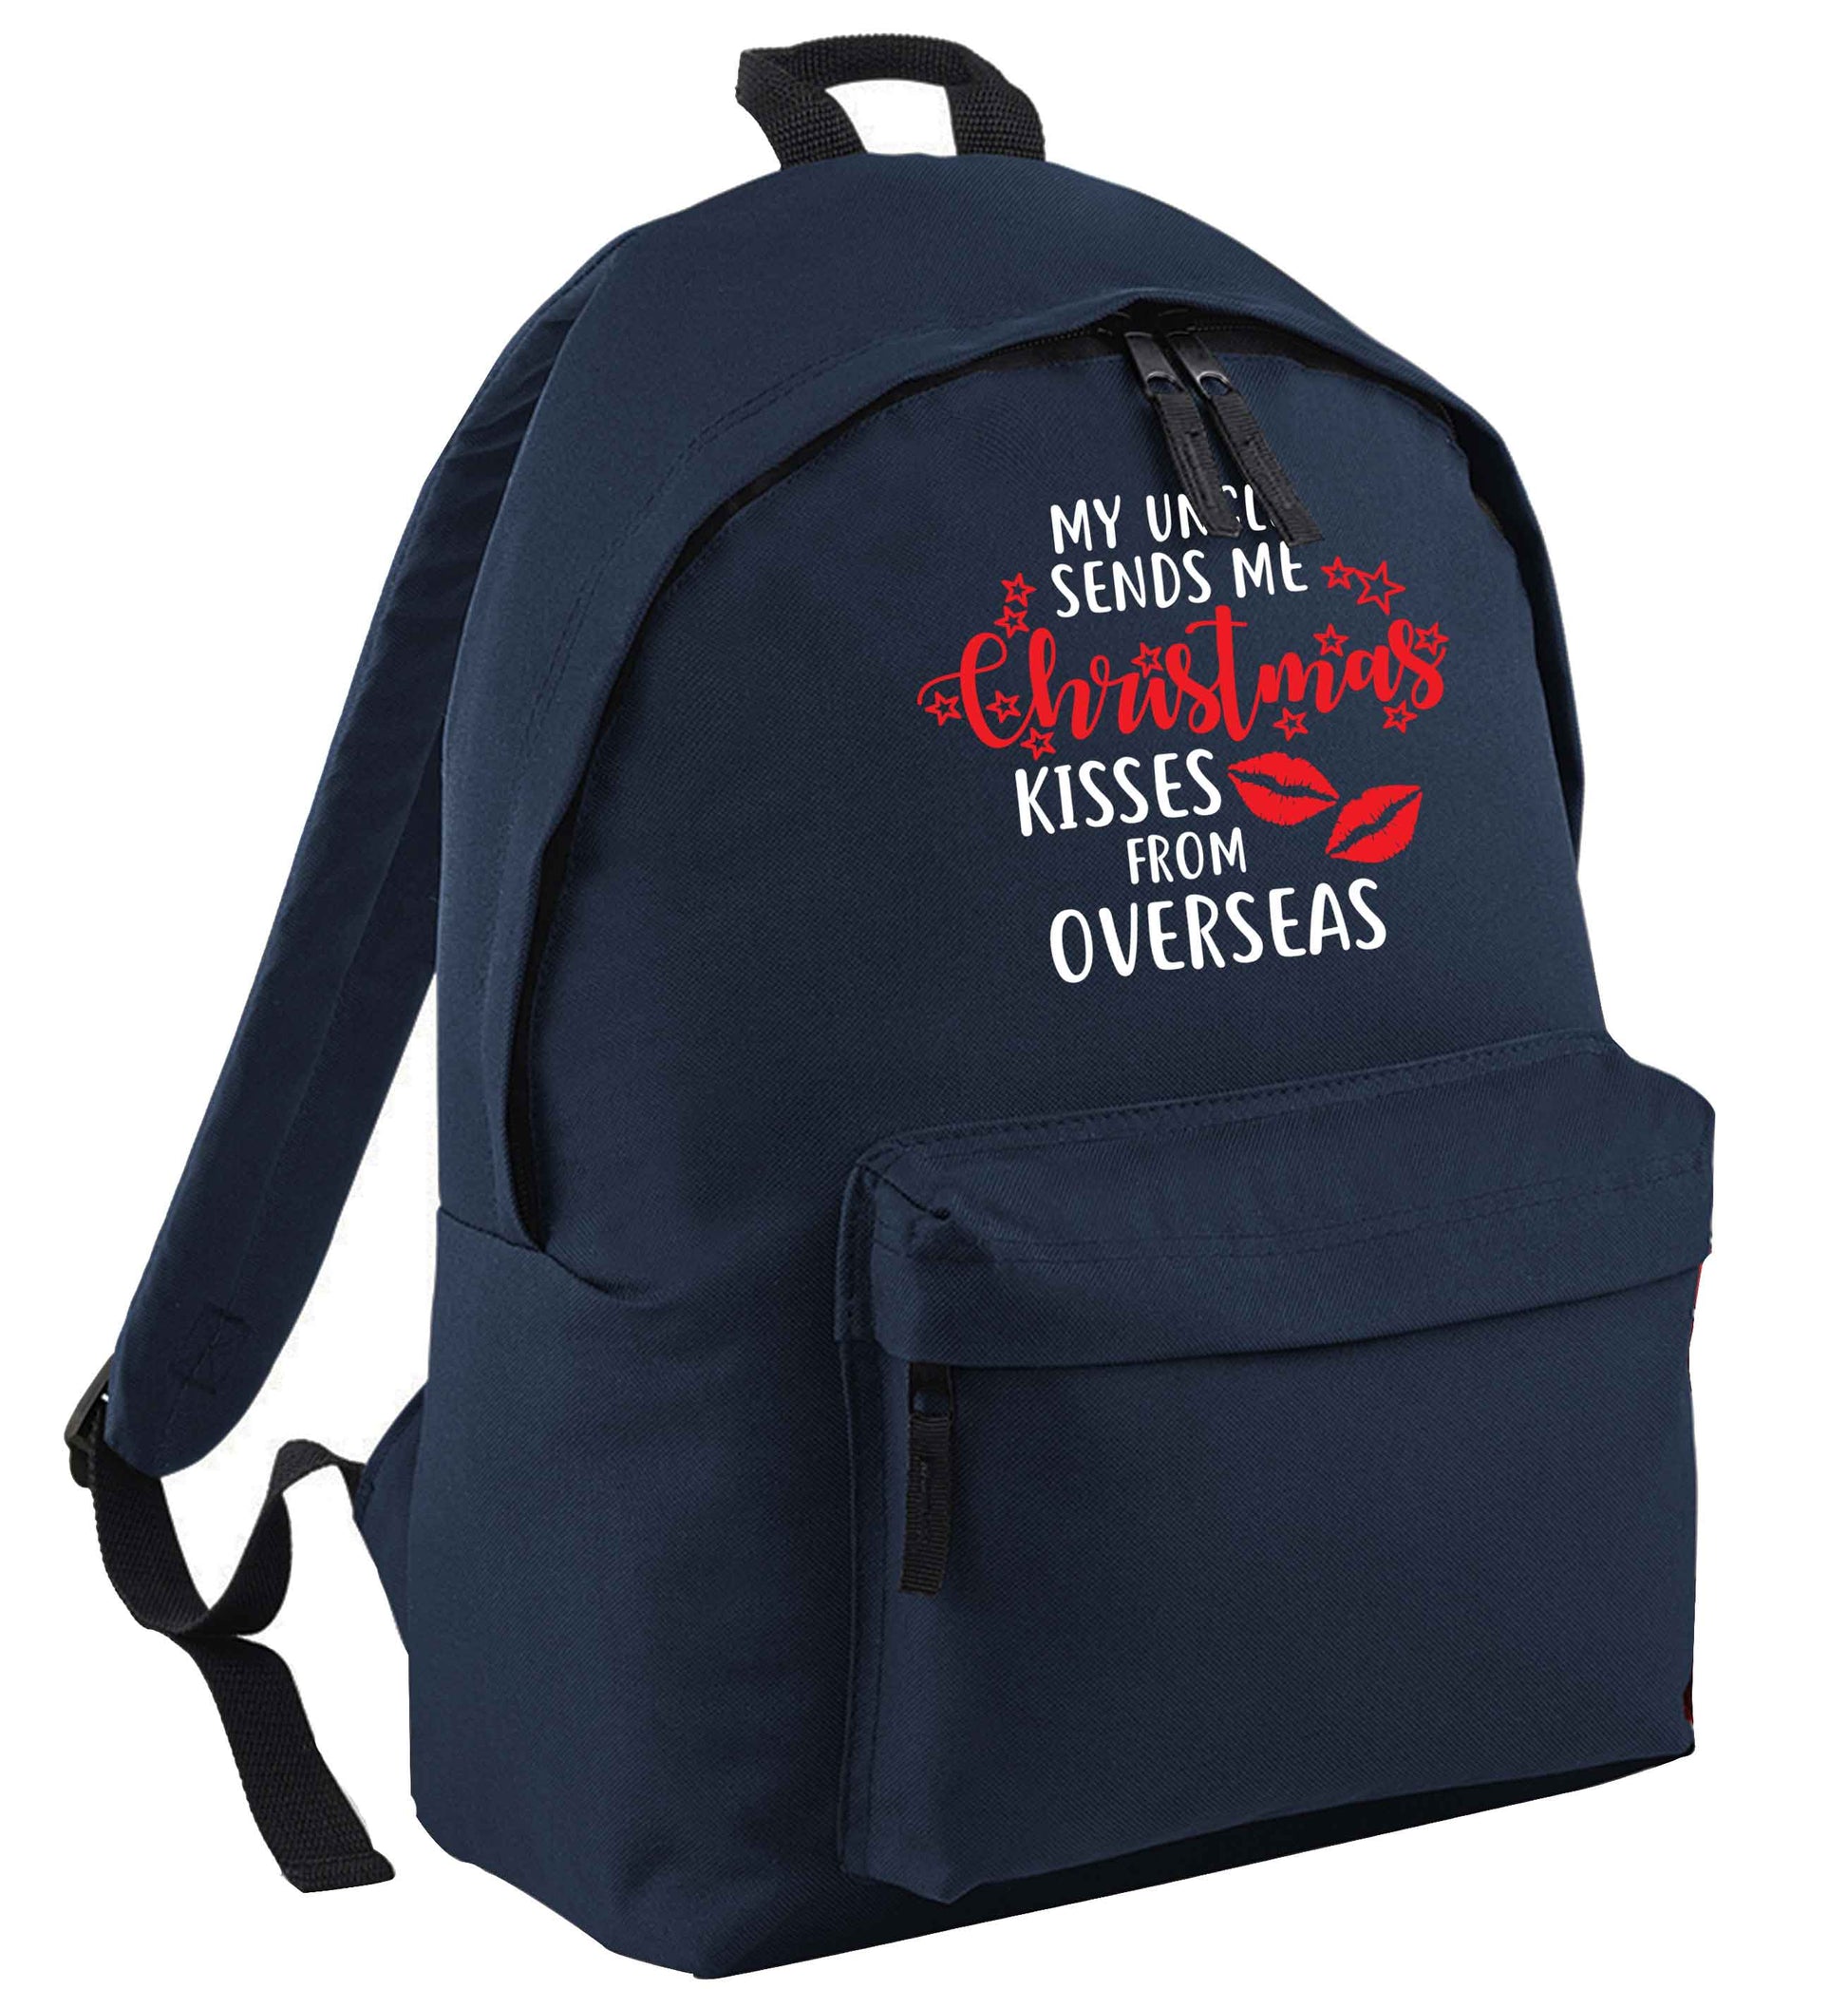 Brother Christmas Kisses Overseas | Children's backpack